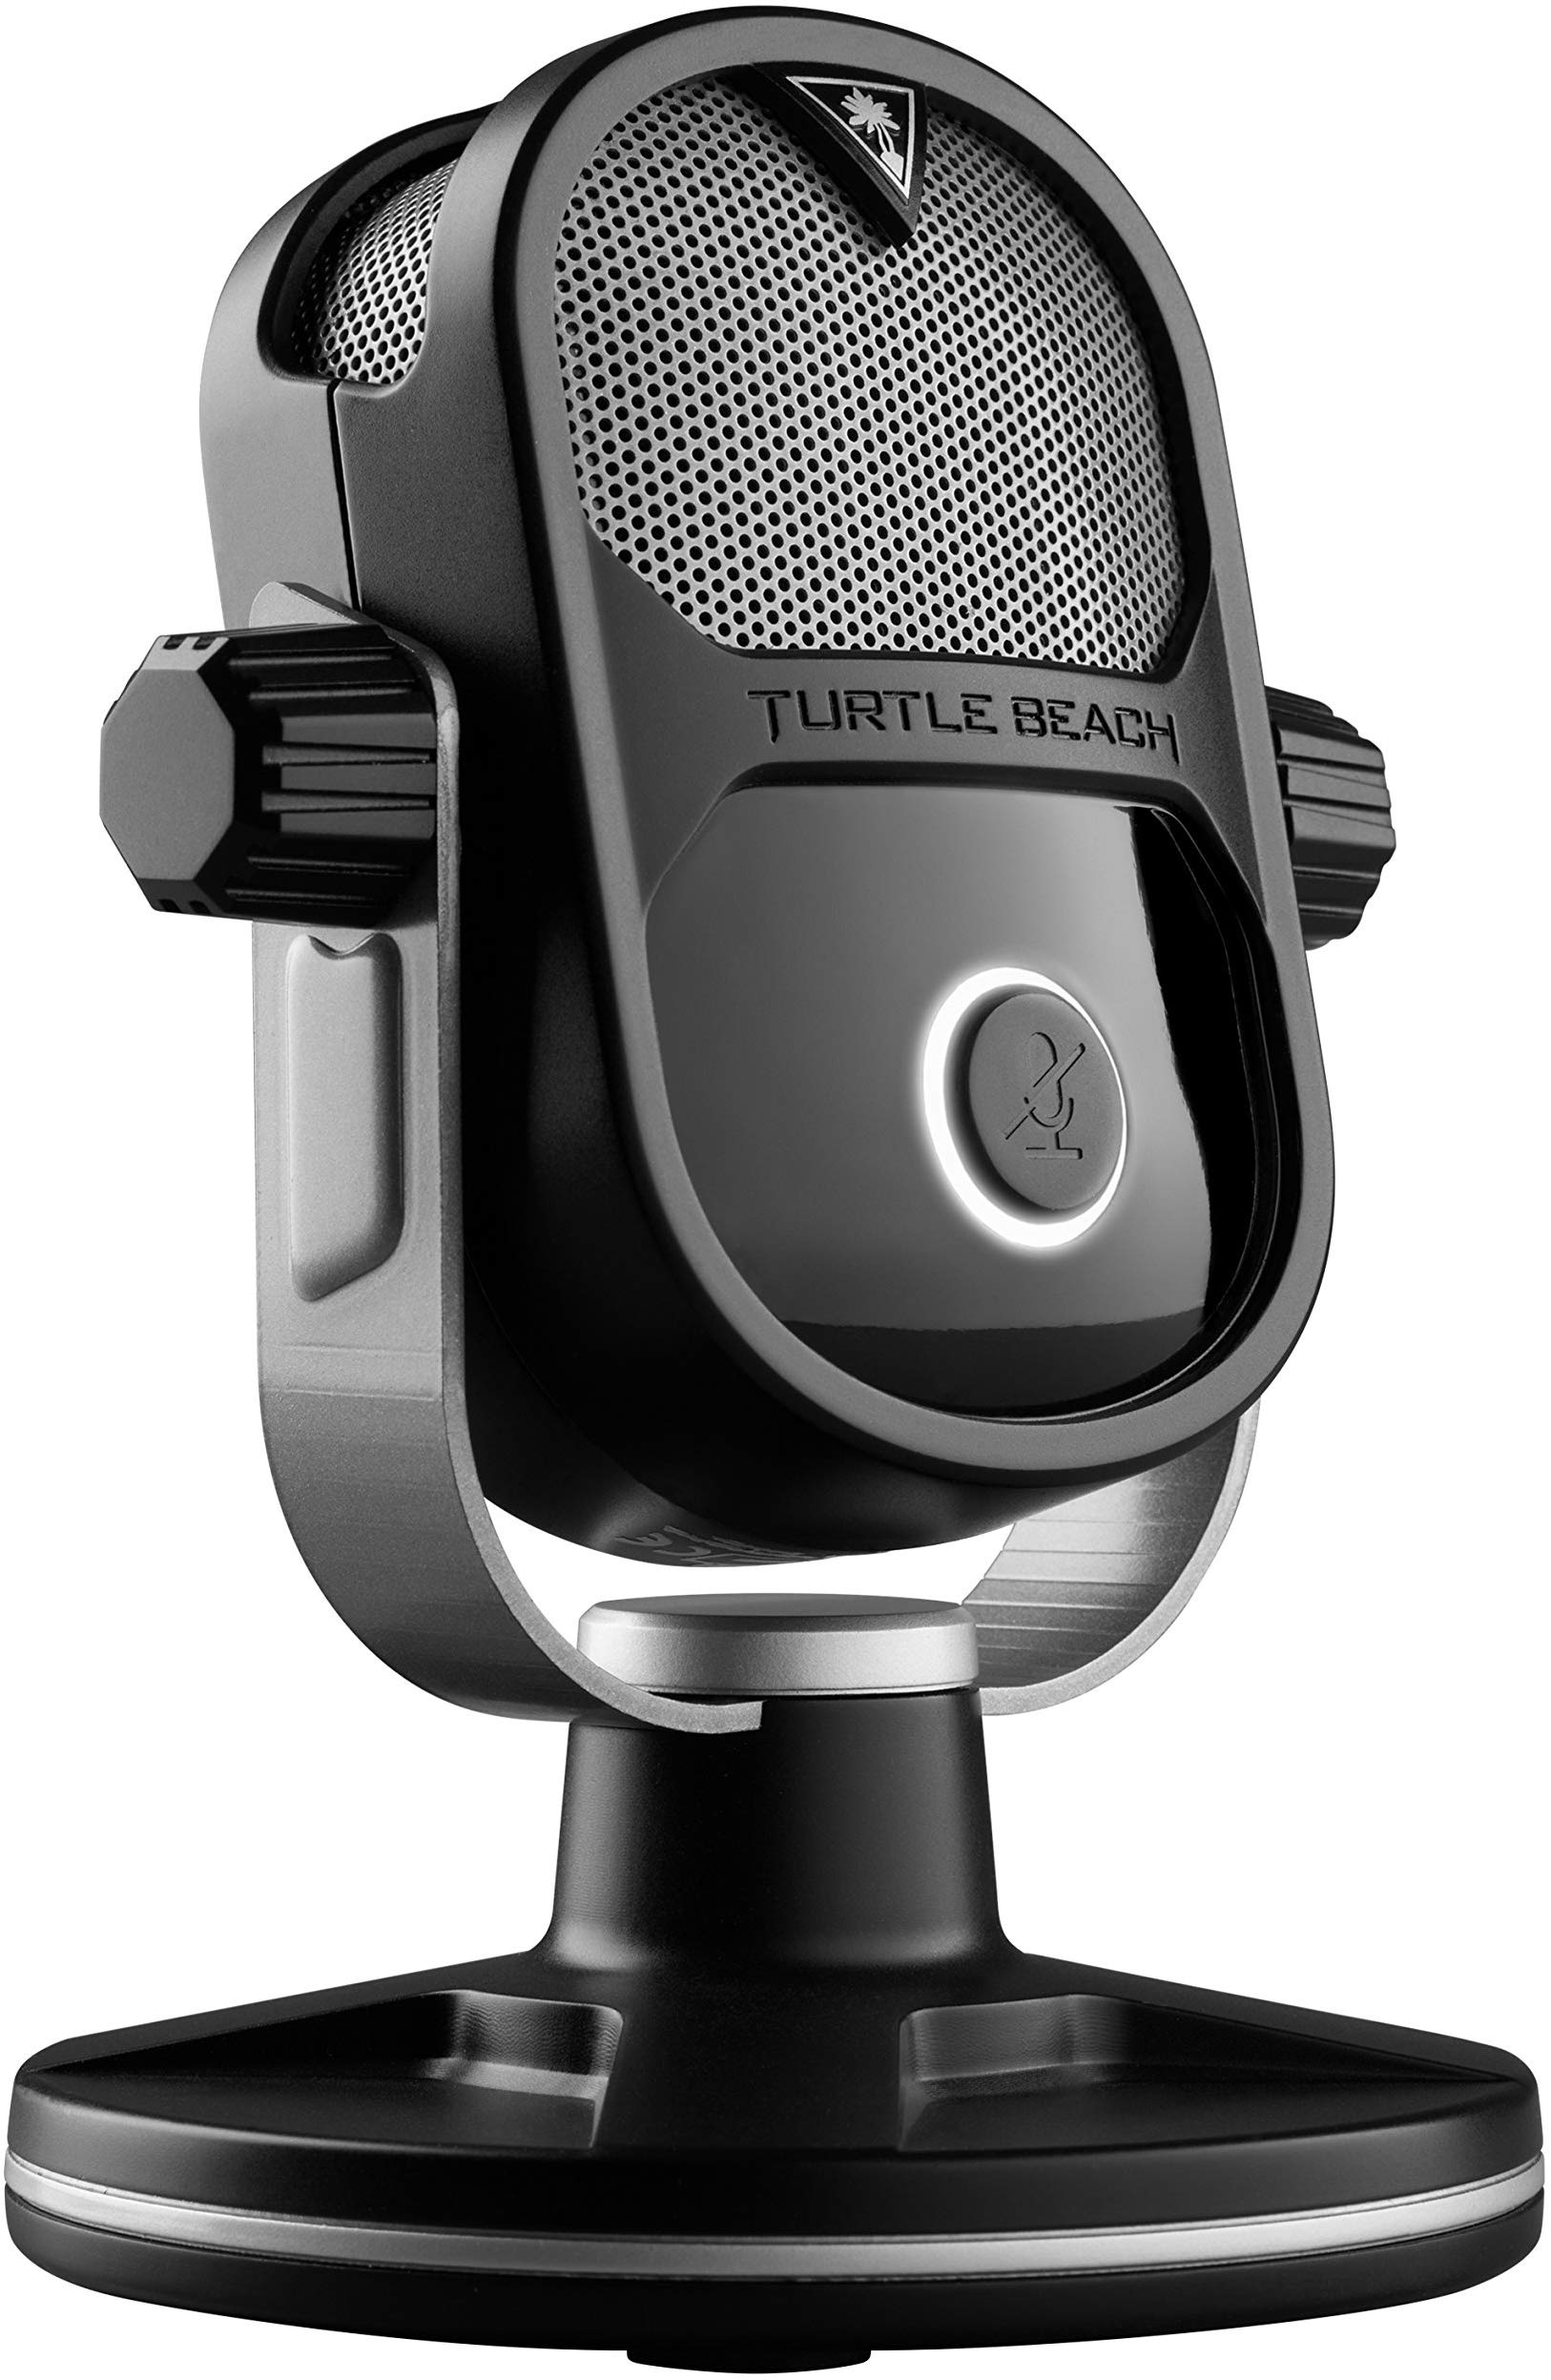 Turtle Beach - Universal digital USB Stream Mic - TruSpeak - Xbox One, PS4 and PC